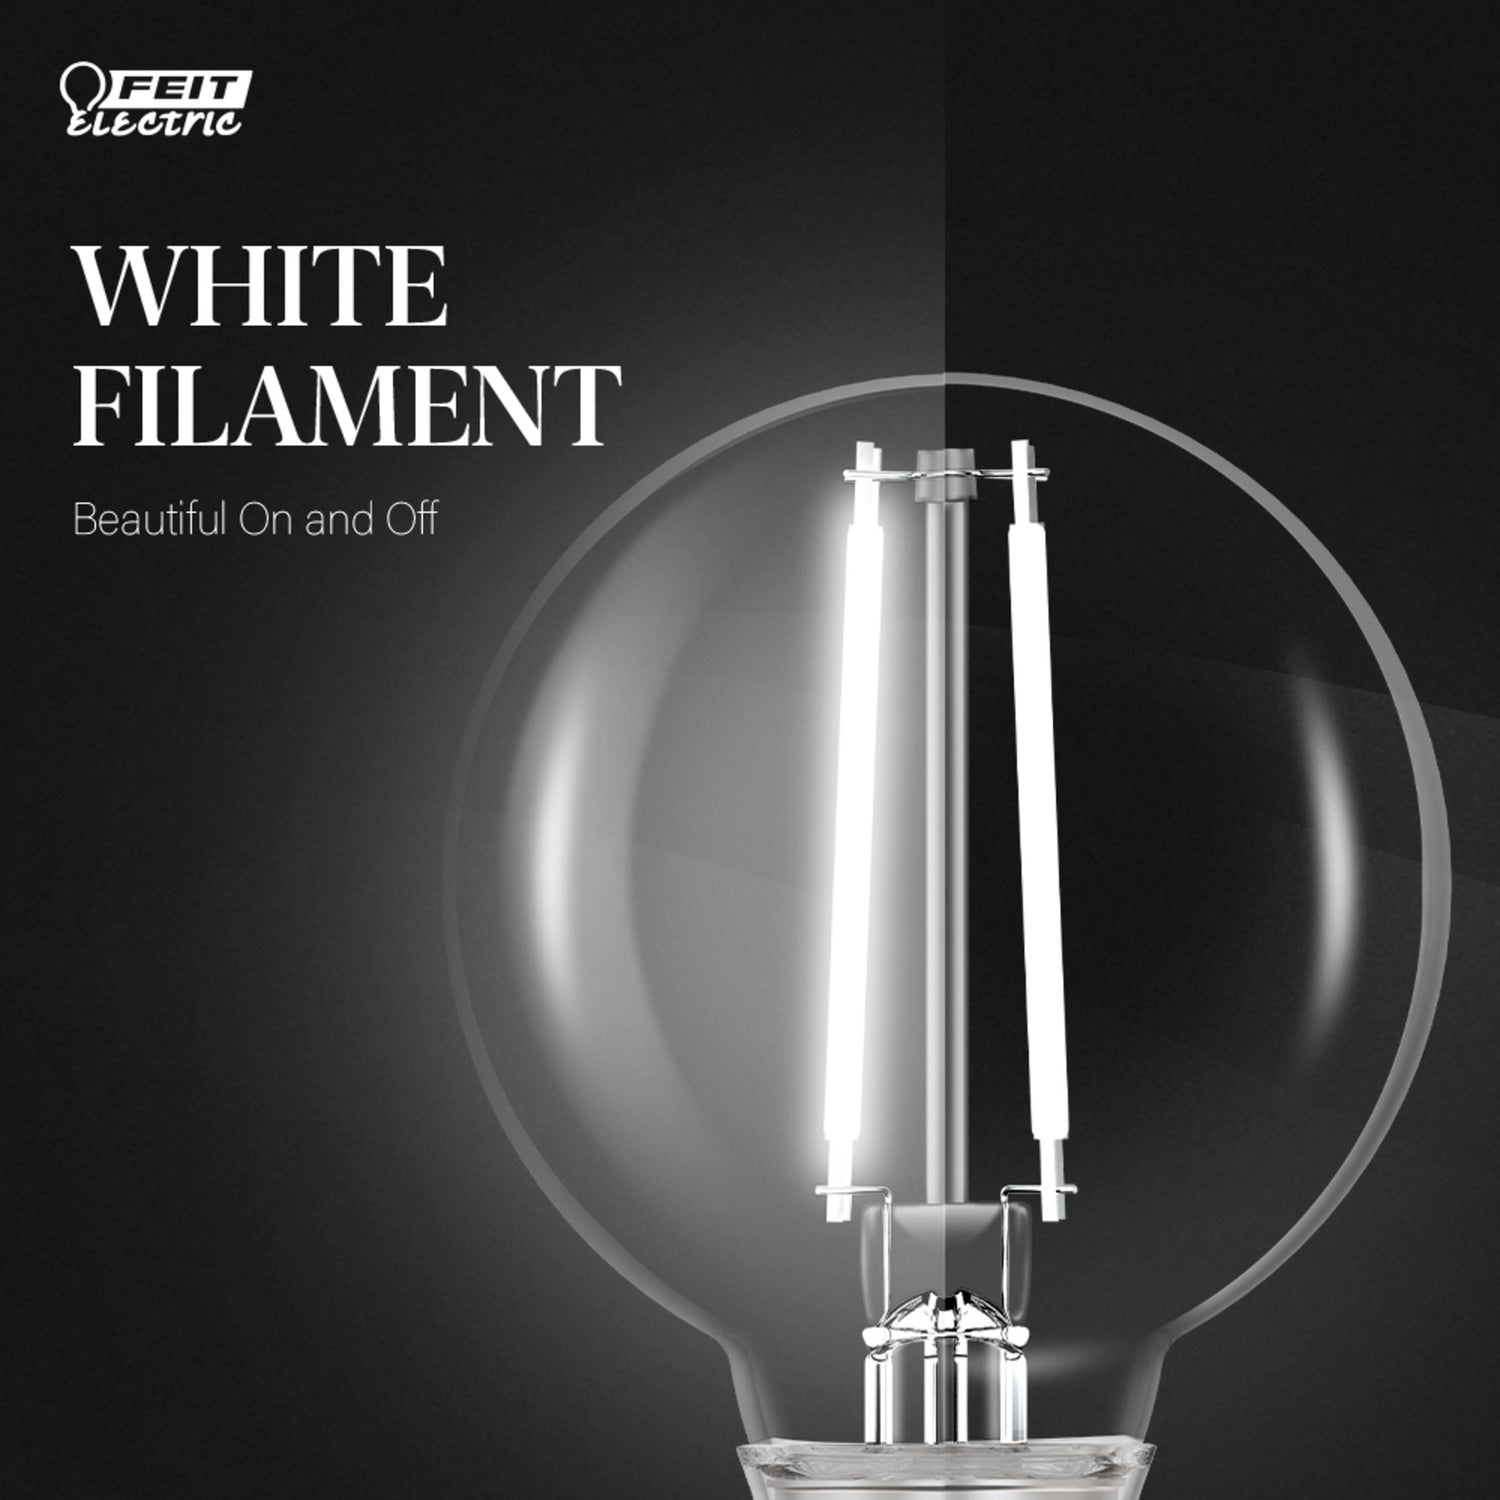 3.8W (40W Replacement) Daylight (5000K) G16 1/2 Globe Shape (E12 Base) Exposed White Filament LED Bulb (2-Pack)